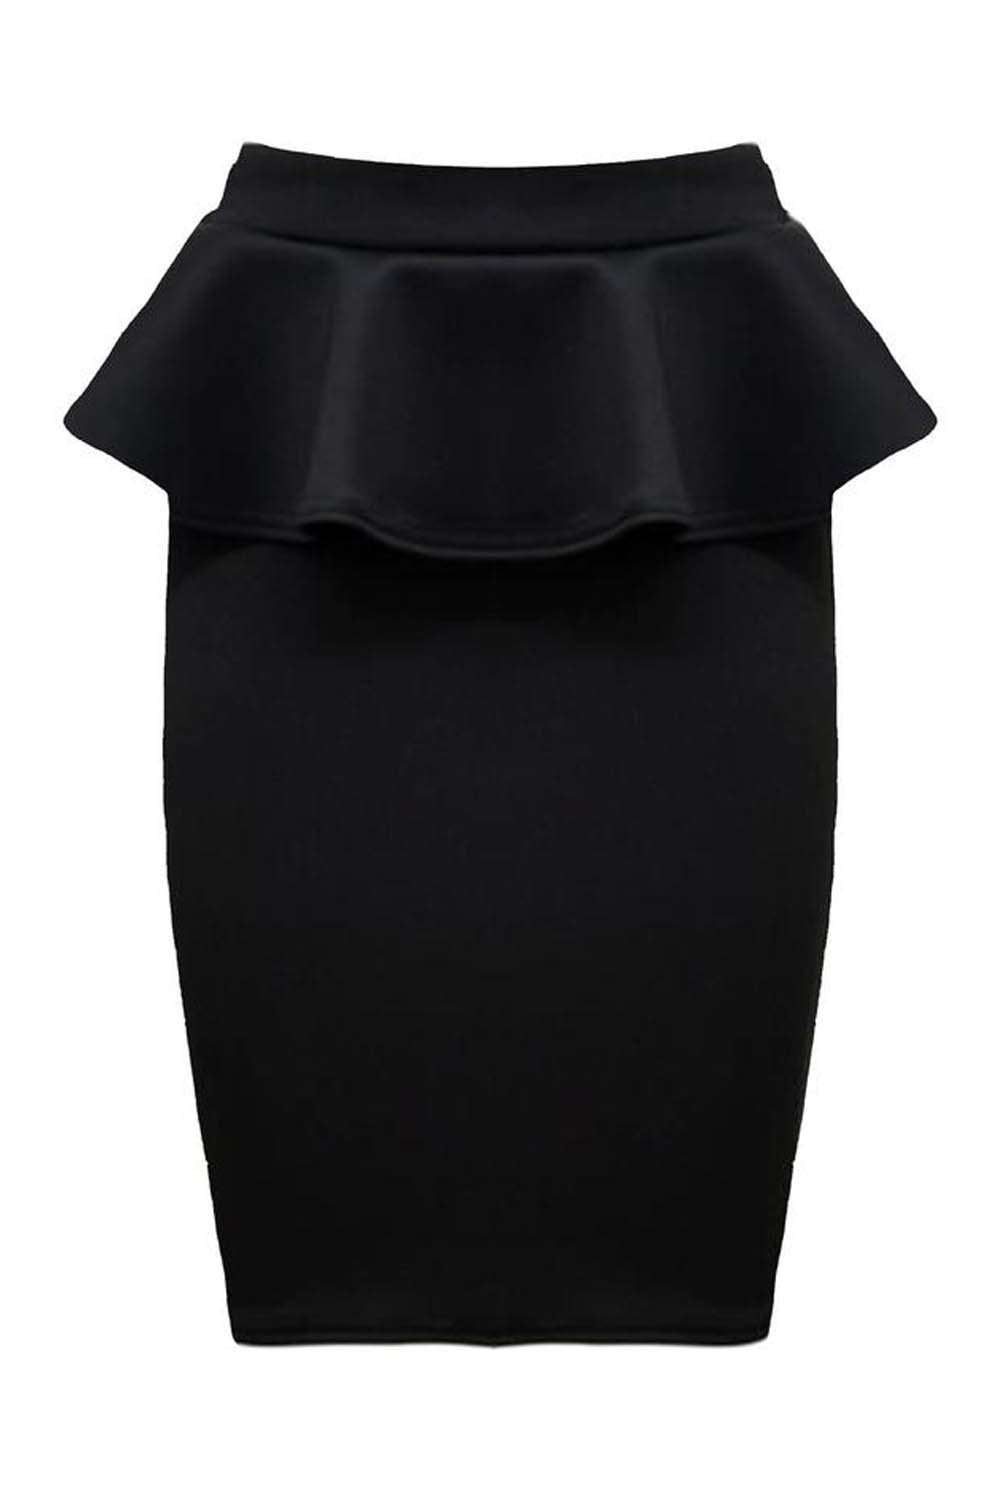 Black High Waisted Peplum Frill Midi Pencil Skirt - bejealous-com